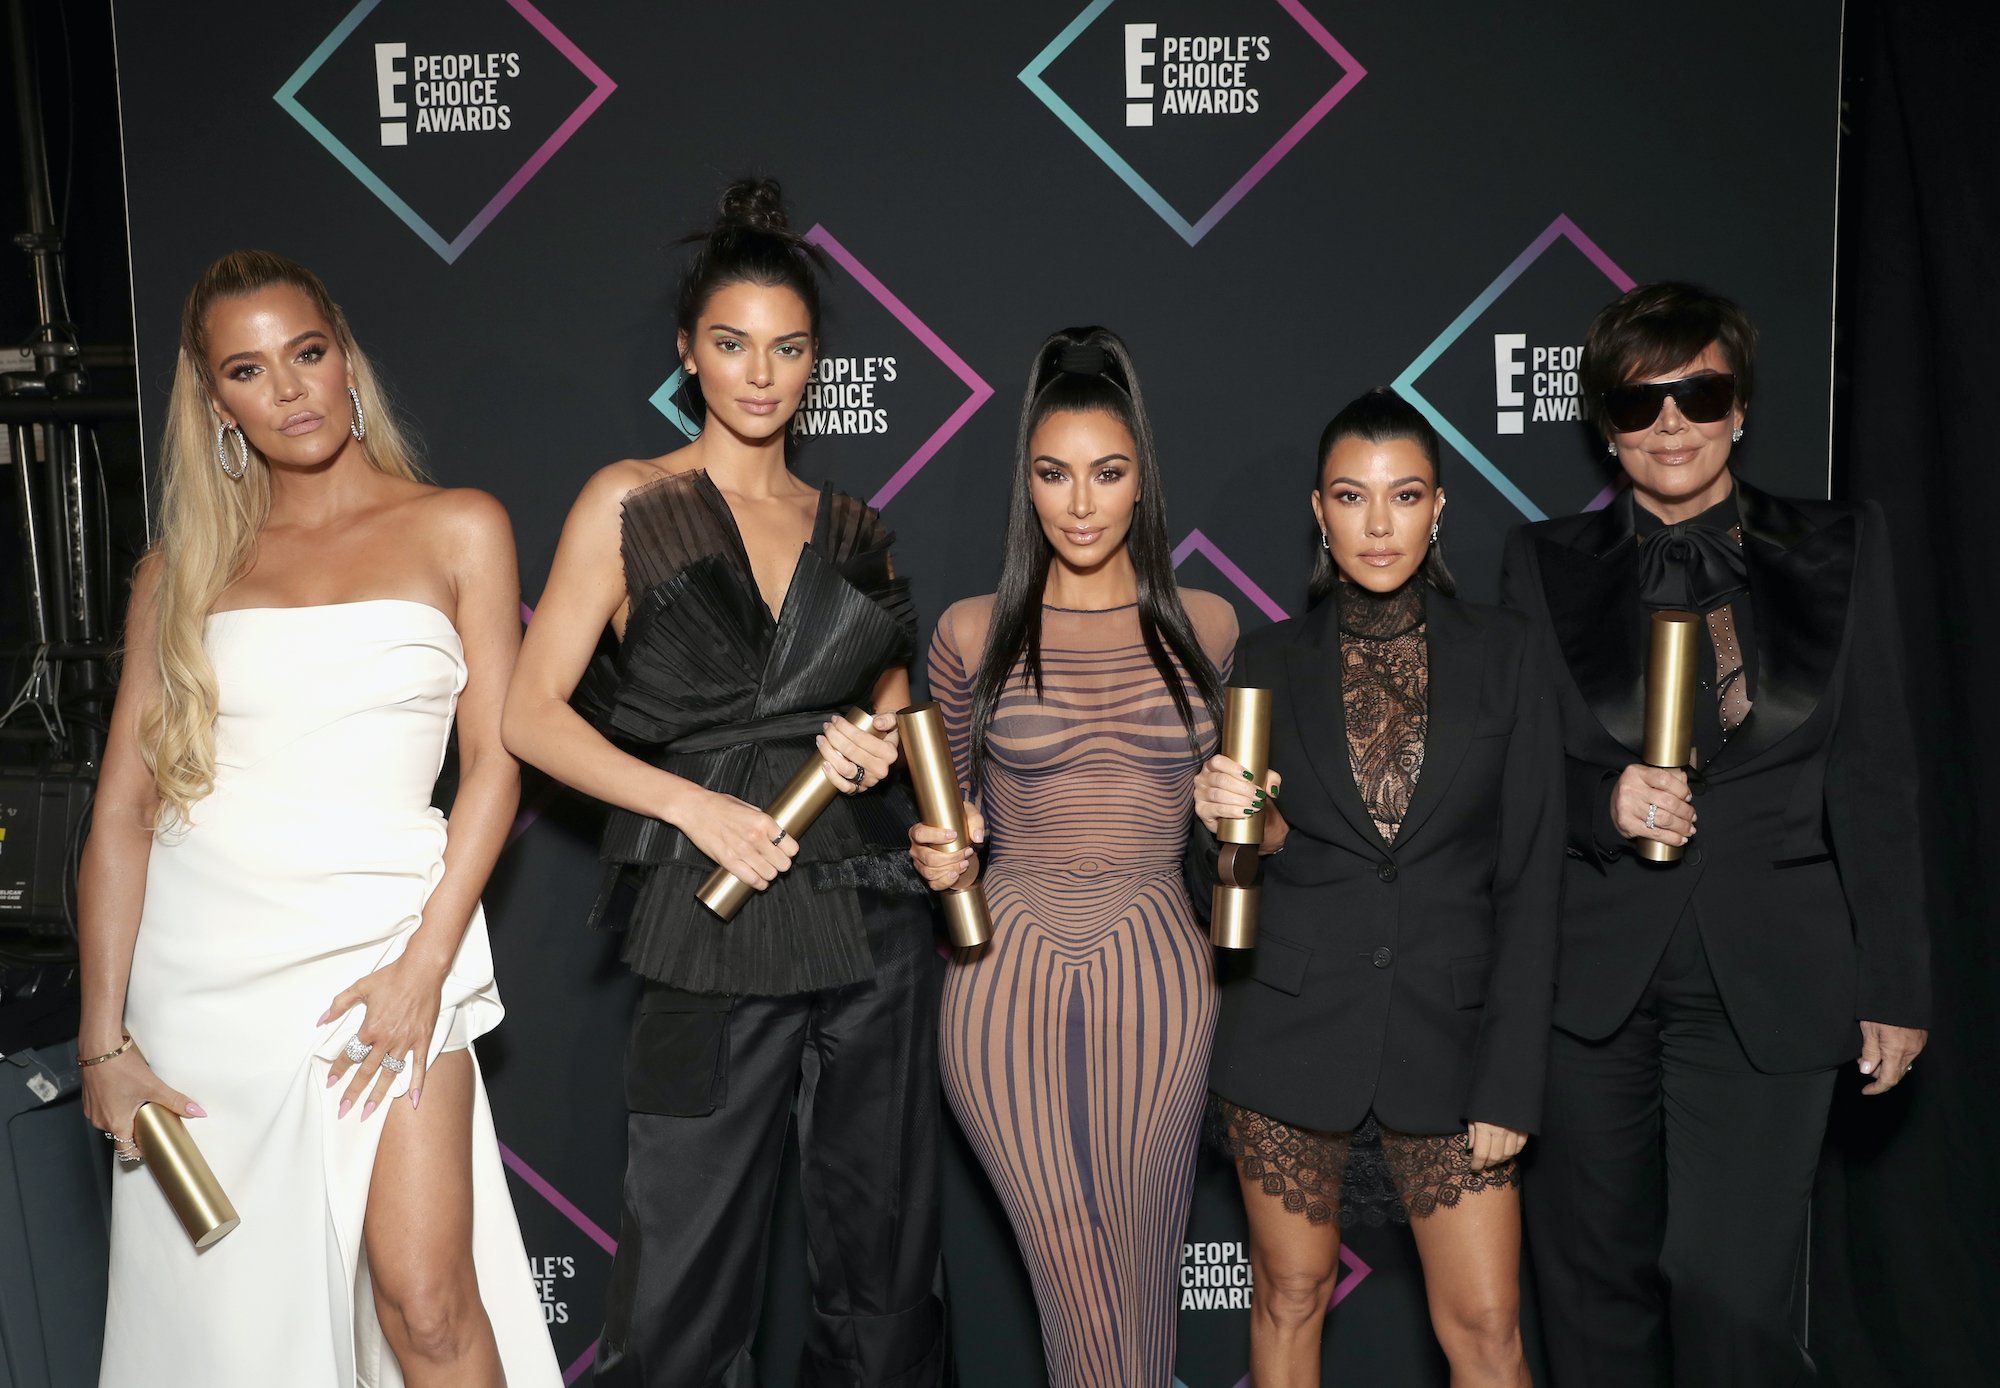 Kardashian Hulu Show Gets Big Update at 2021 People’s Choice Awards